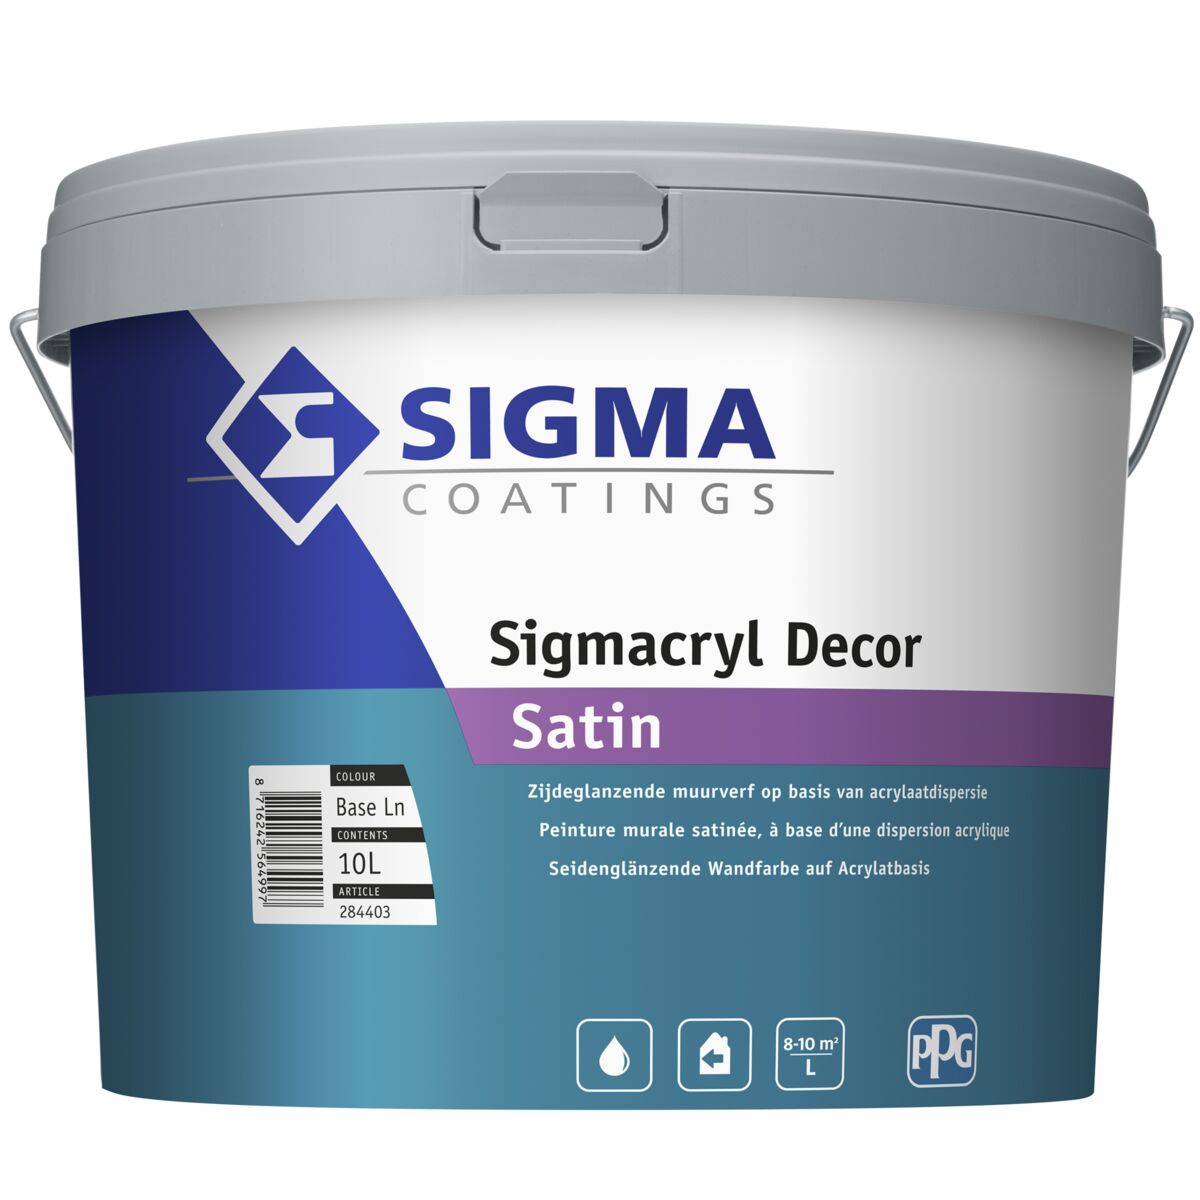 Sigmacryl Decor Satin